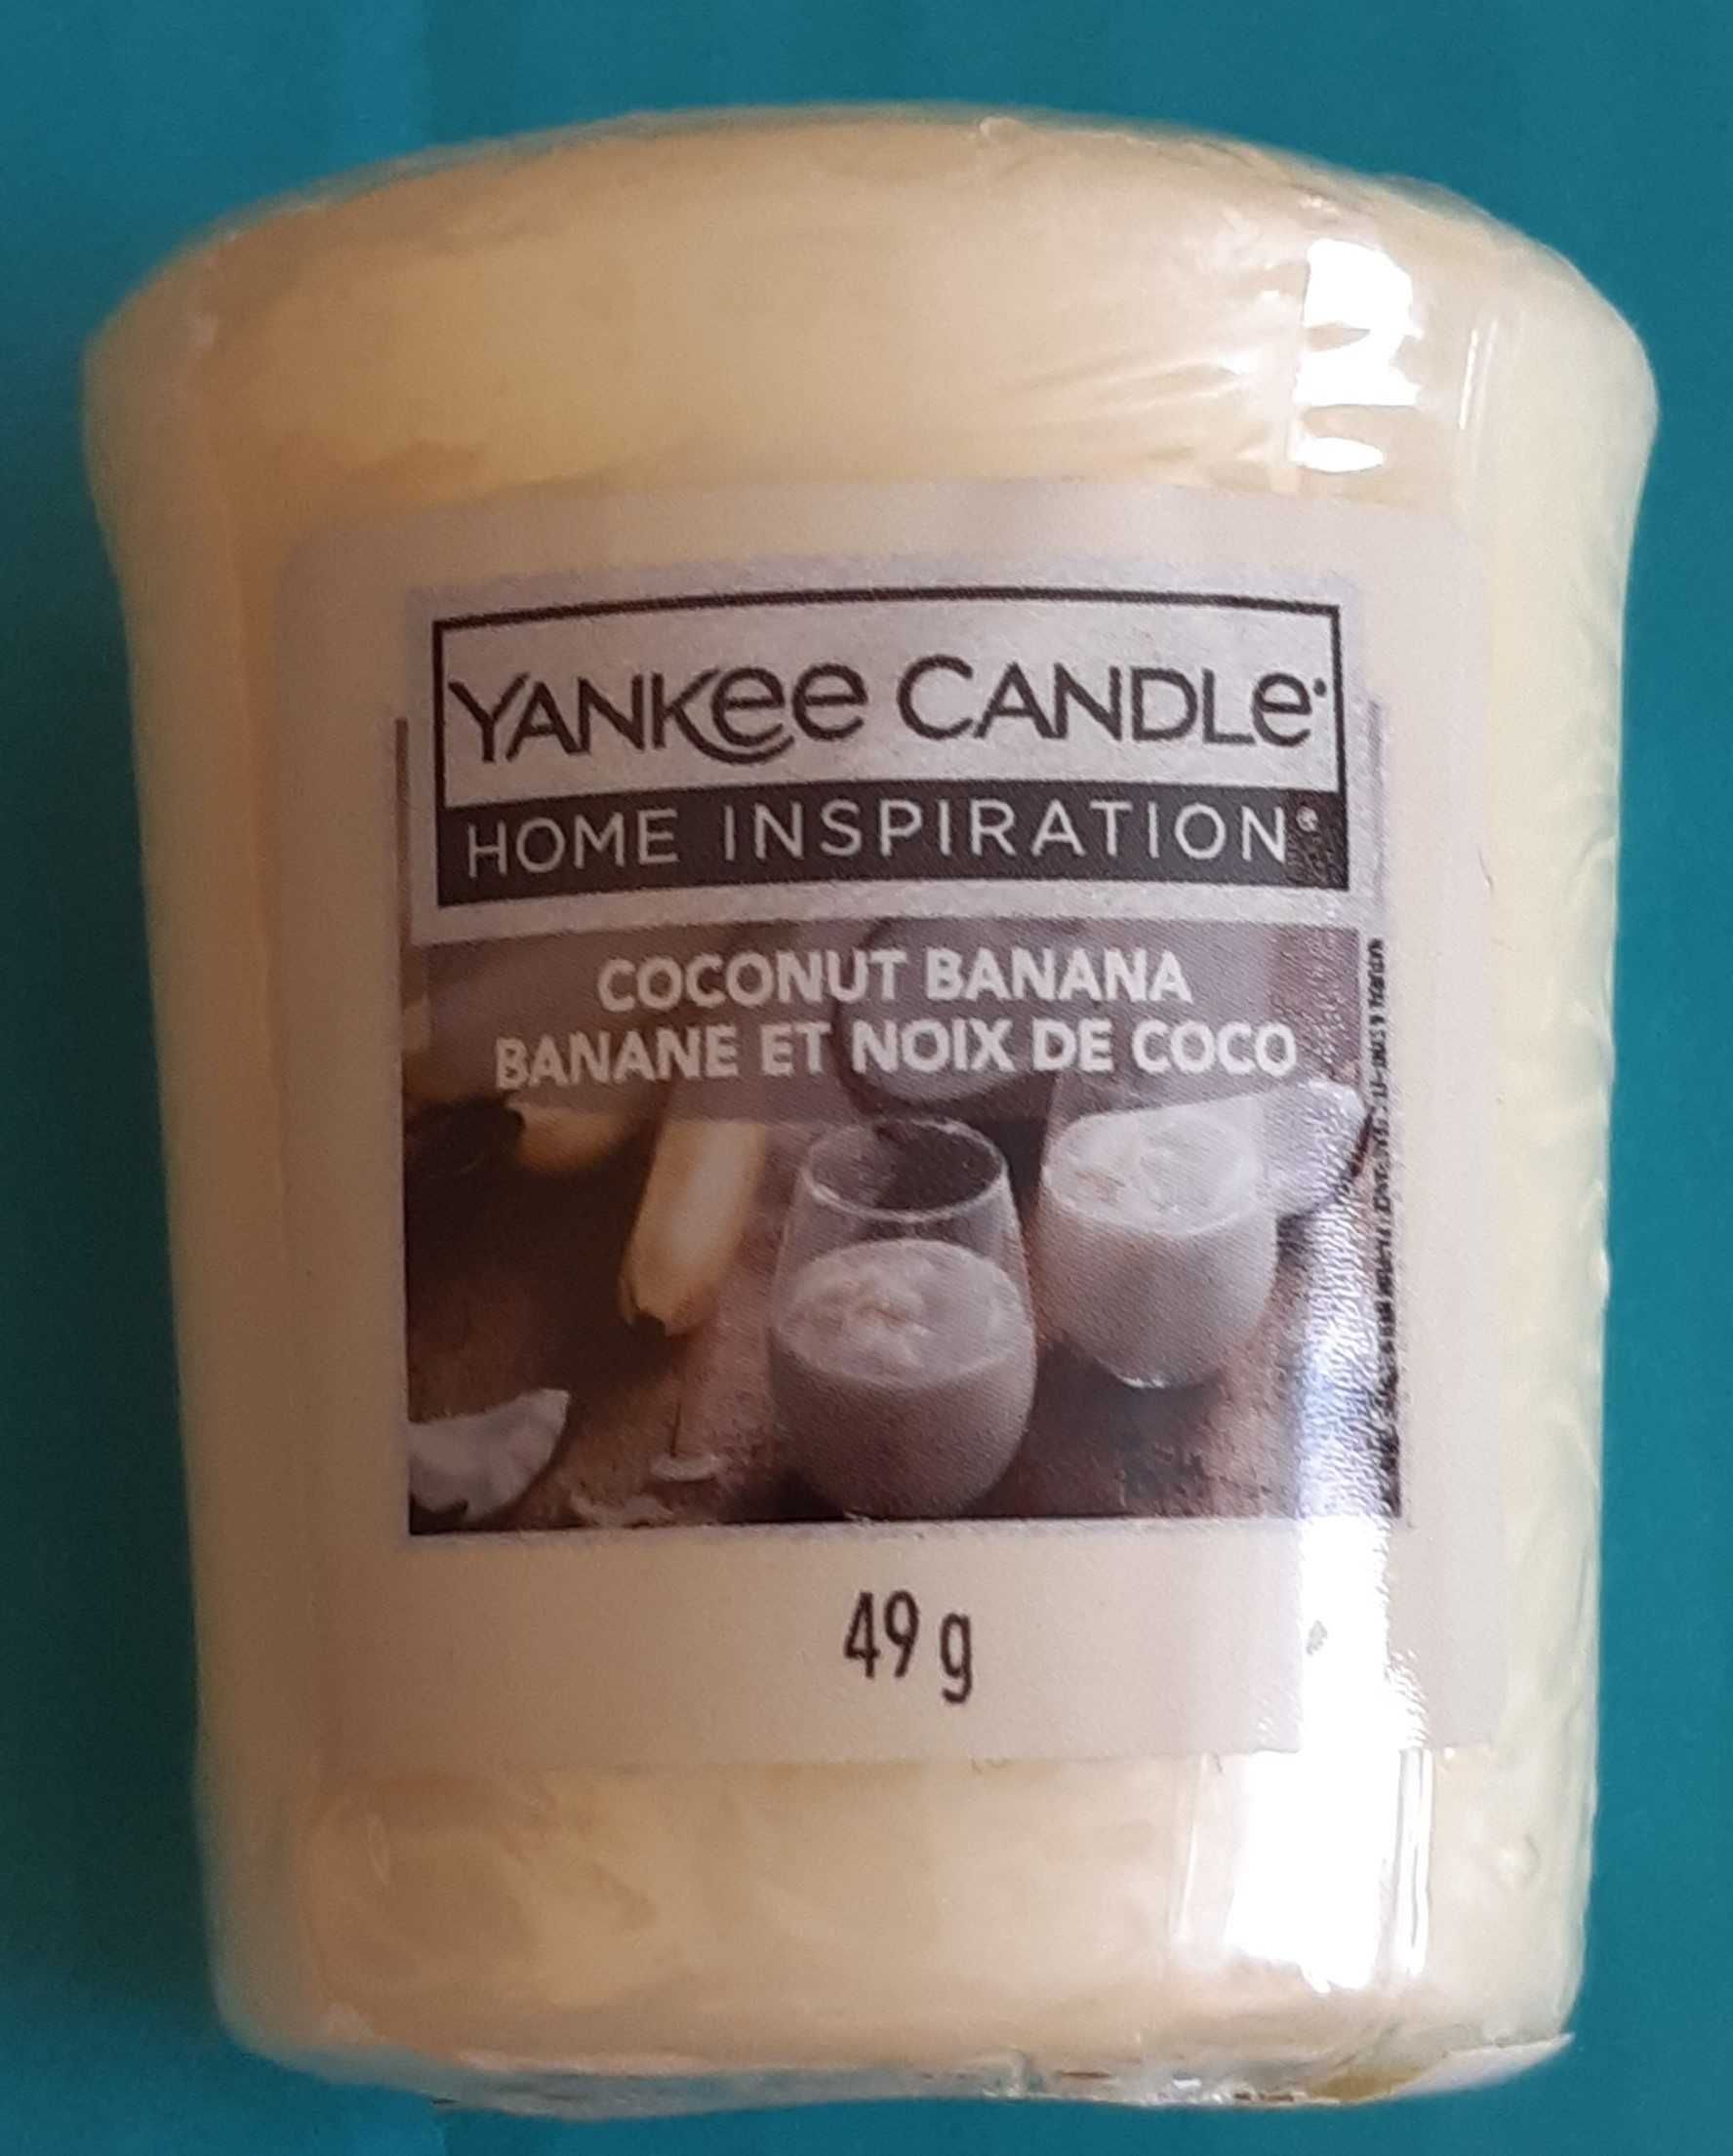 Sampler votive coconut banana yankee candle